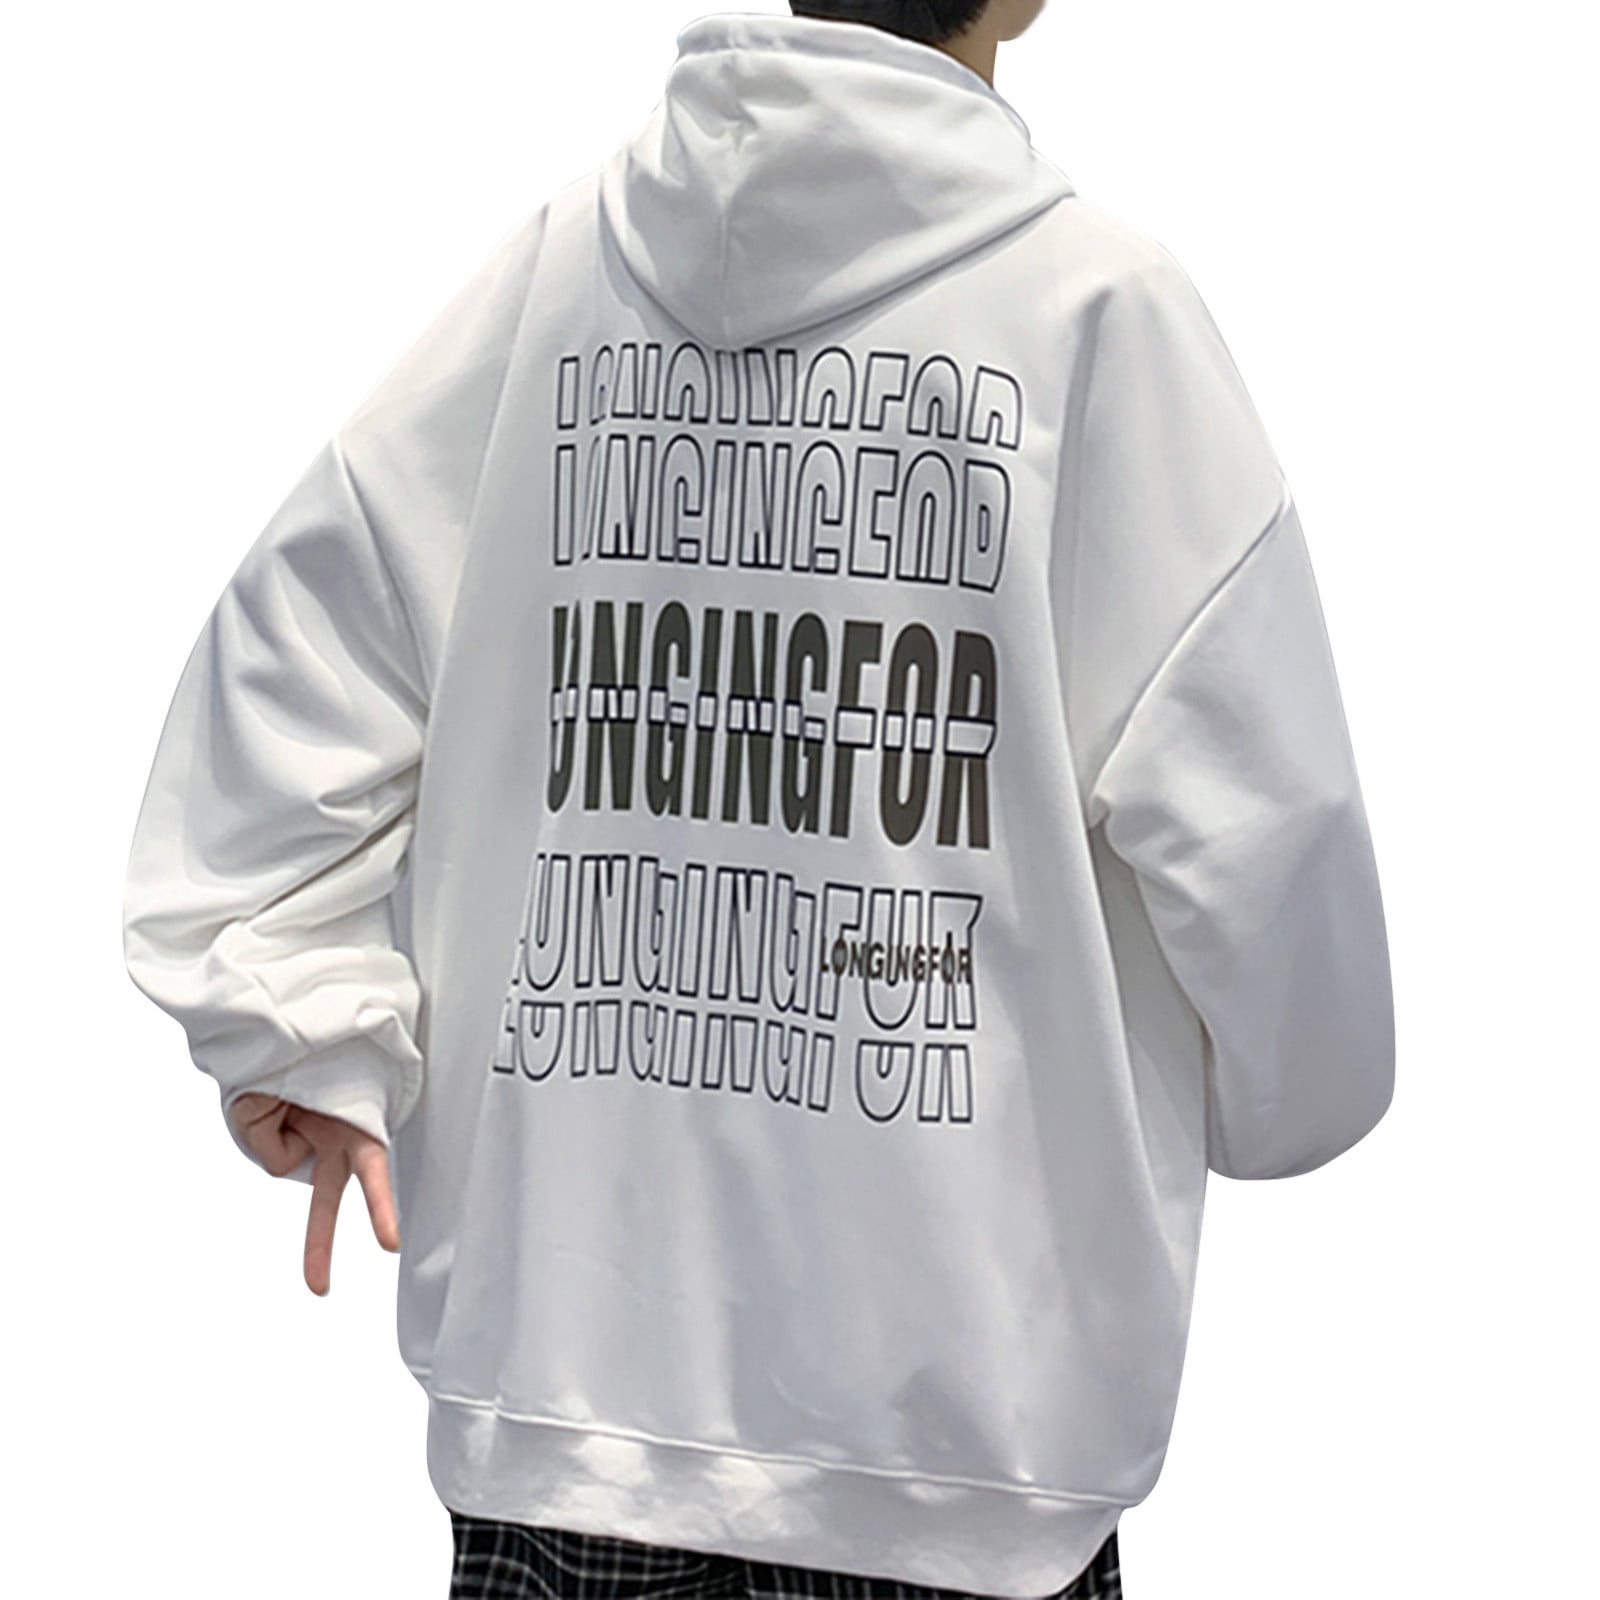 Personligt Charmerende med tiden kpoplk Big And Tall Sweatshirts For Men,Hoodies Jackets 3D Digital Printed  3D Pullover Hoodie Sweatshirt Street Fashion Cool Sweaters With Pocket  Series(White,XXL)" - Walmart.com